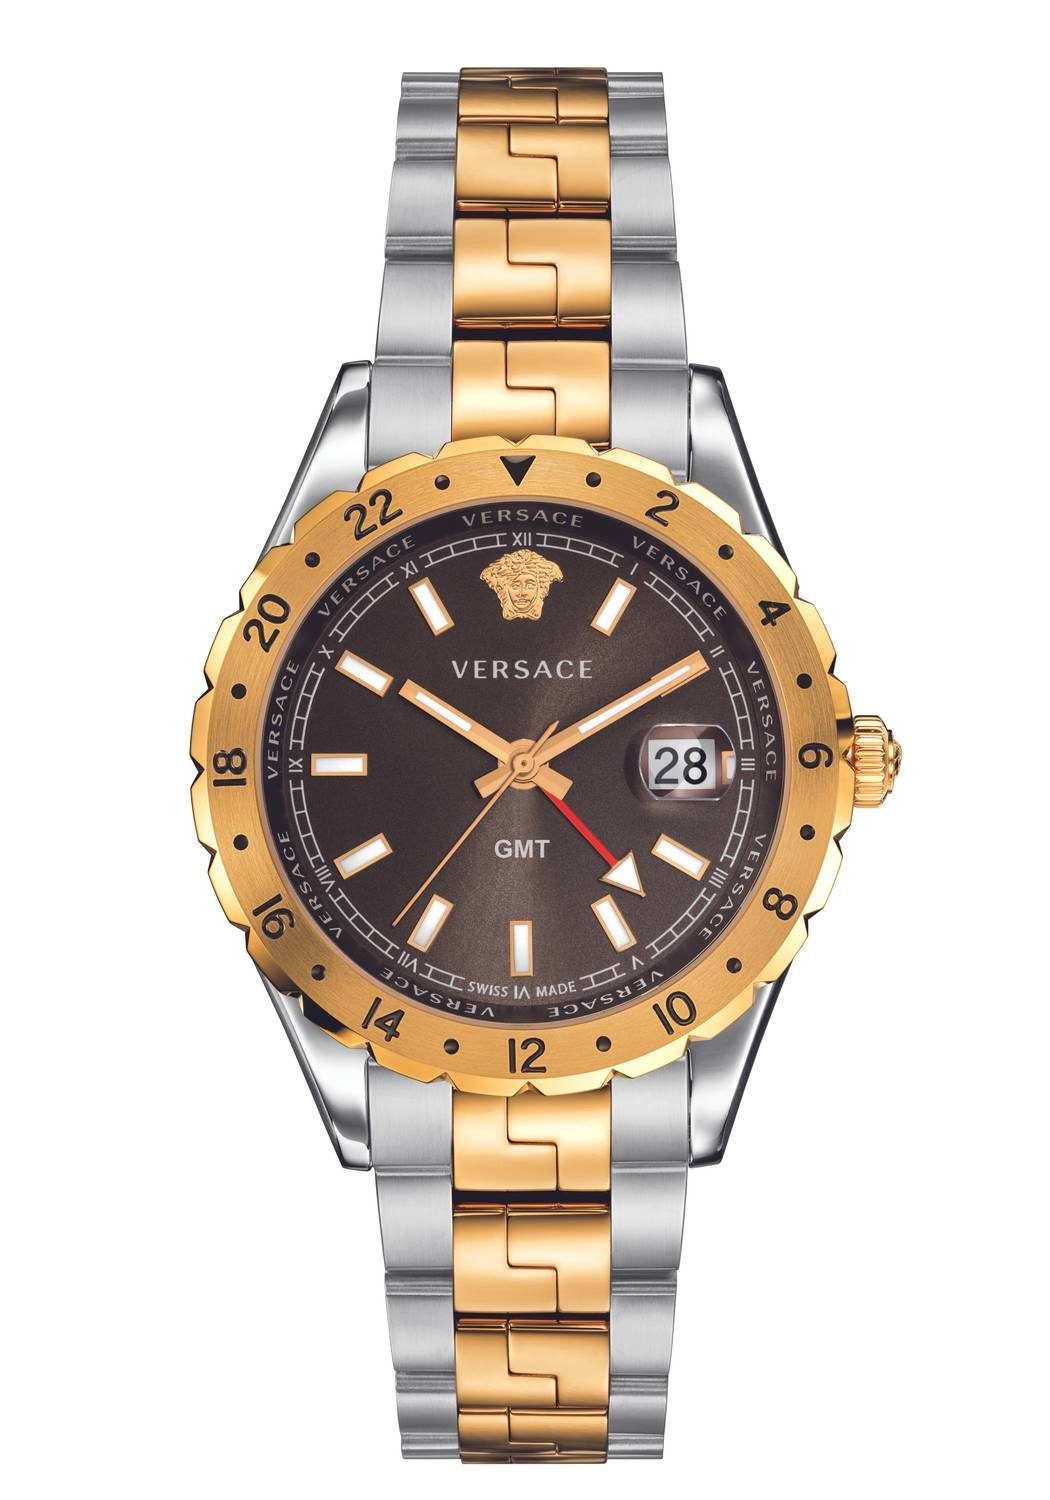 OTTO online | Herren Versace Armbanduhren kaufen